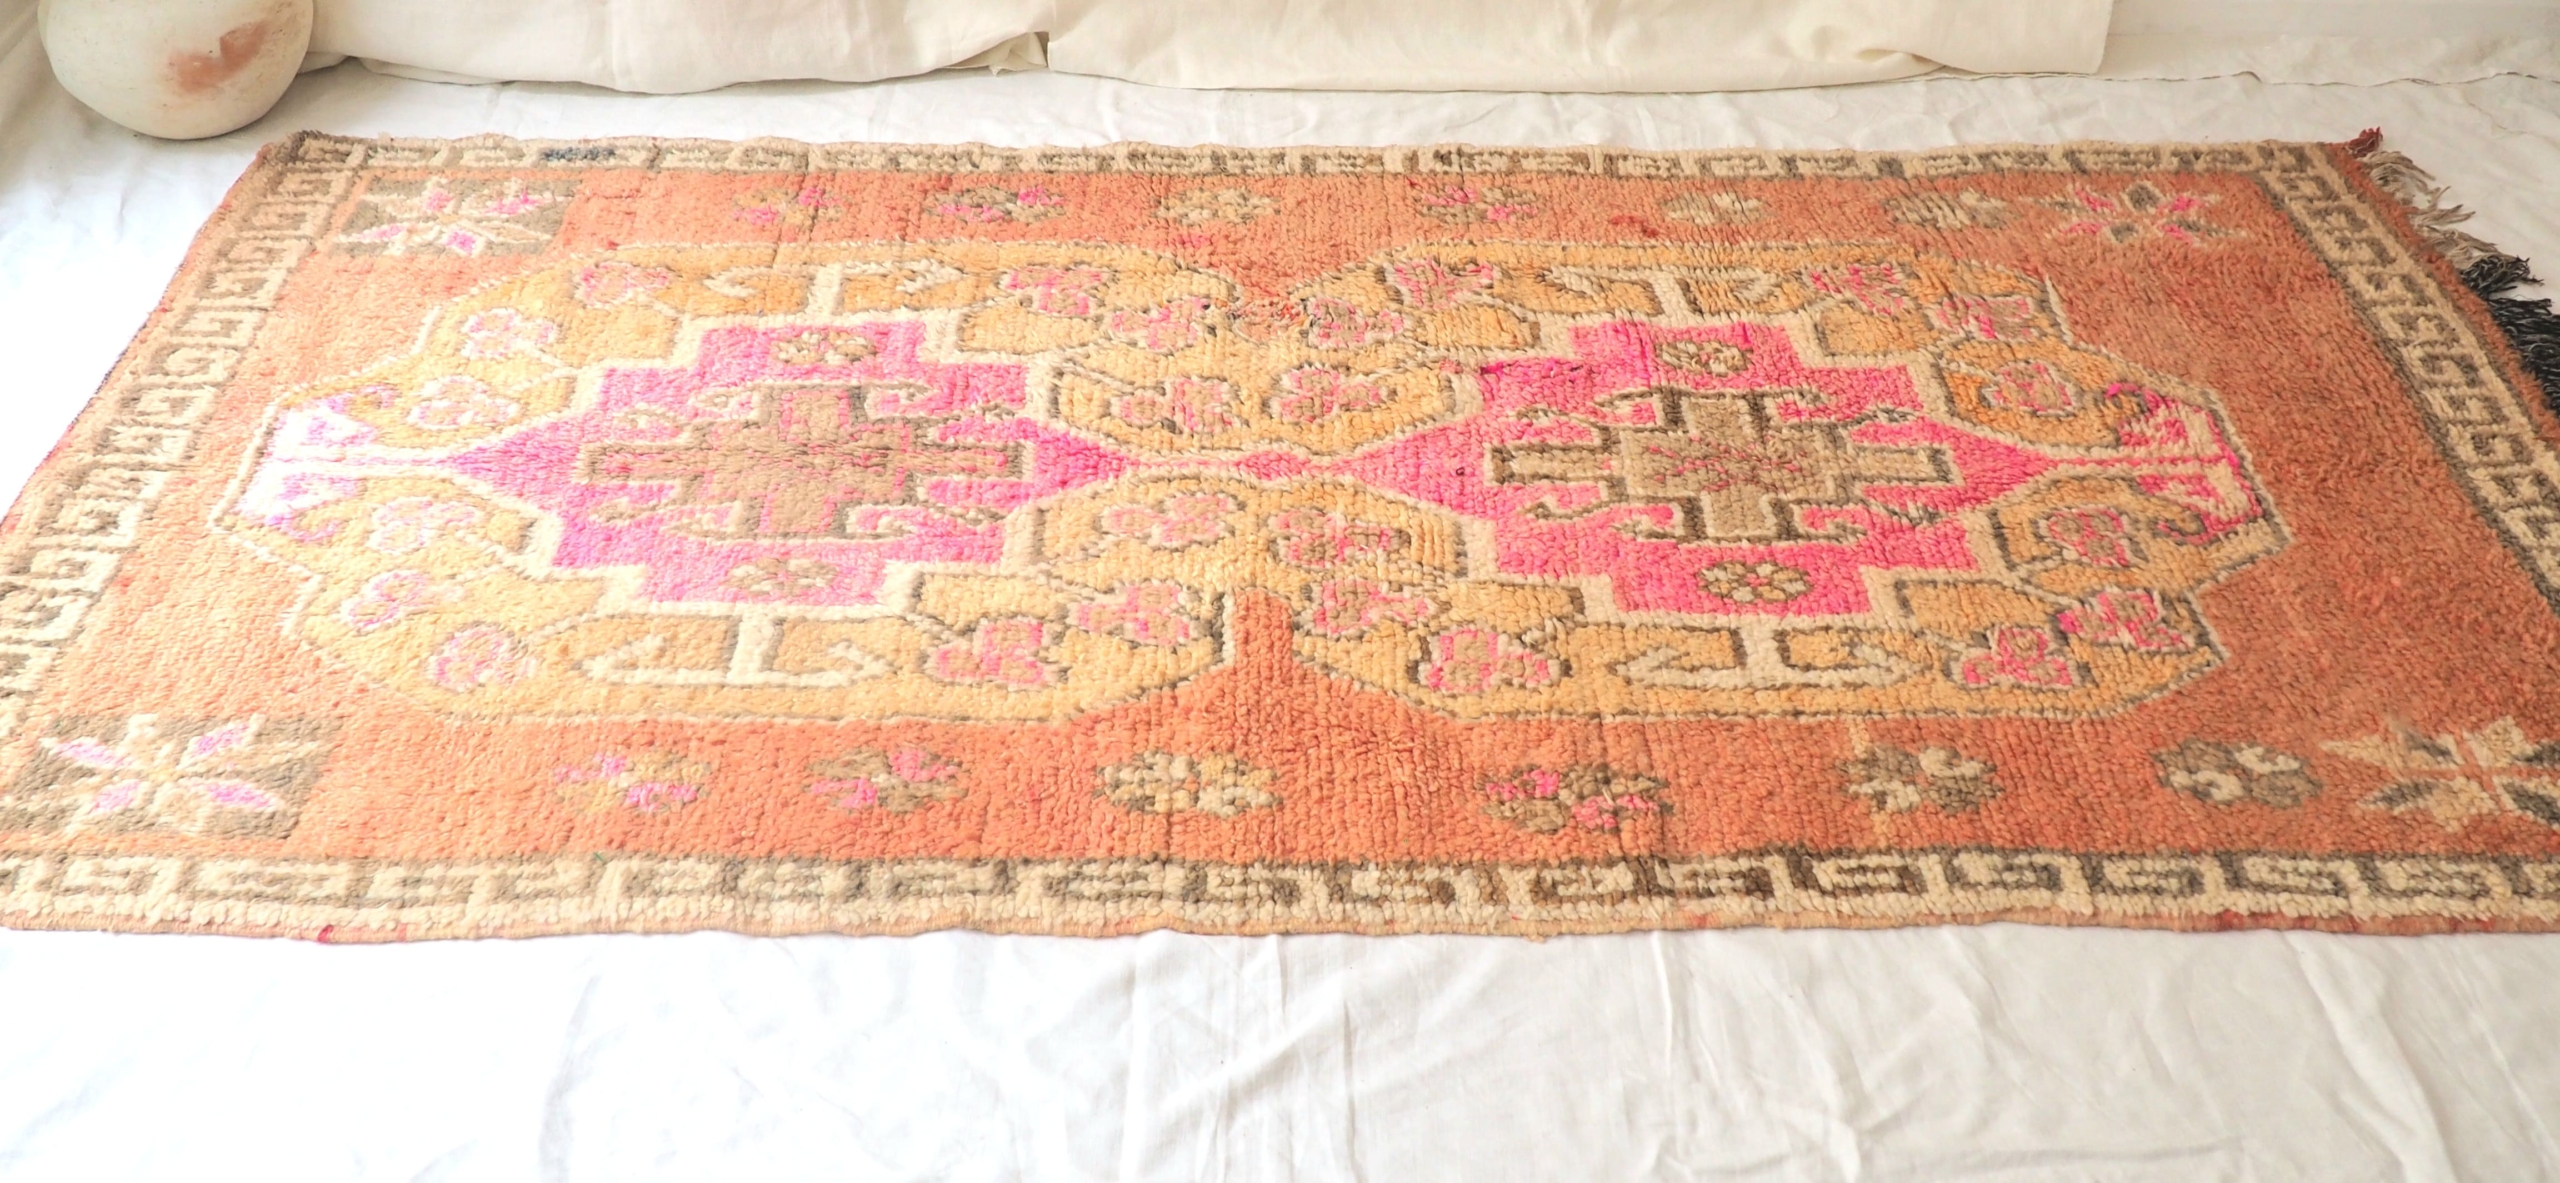 Authentic Berber Moroccan vintage pink rug